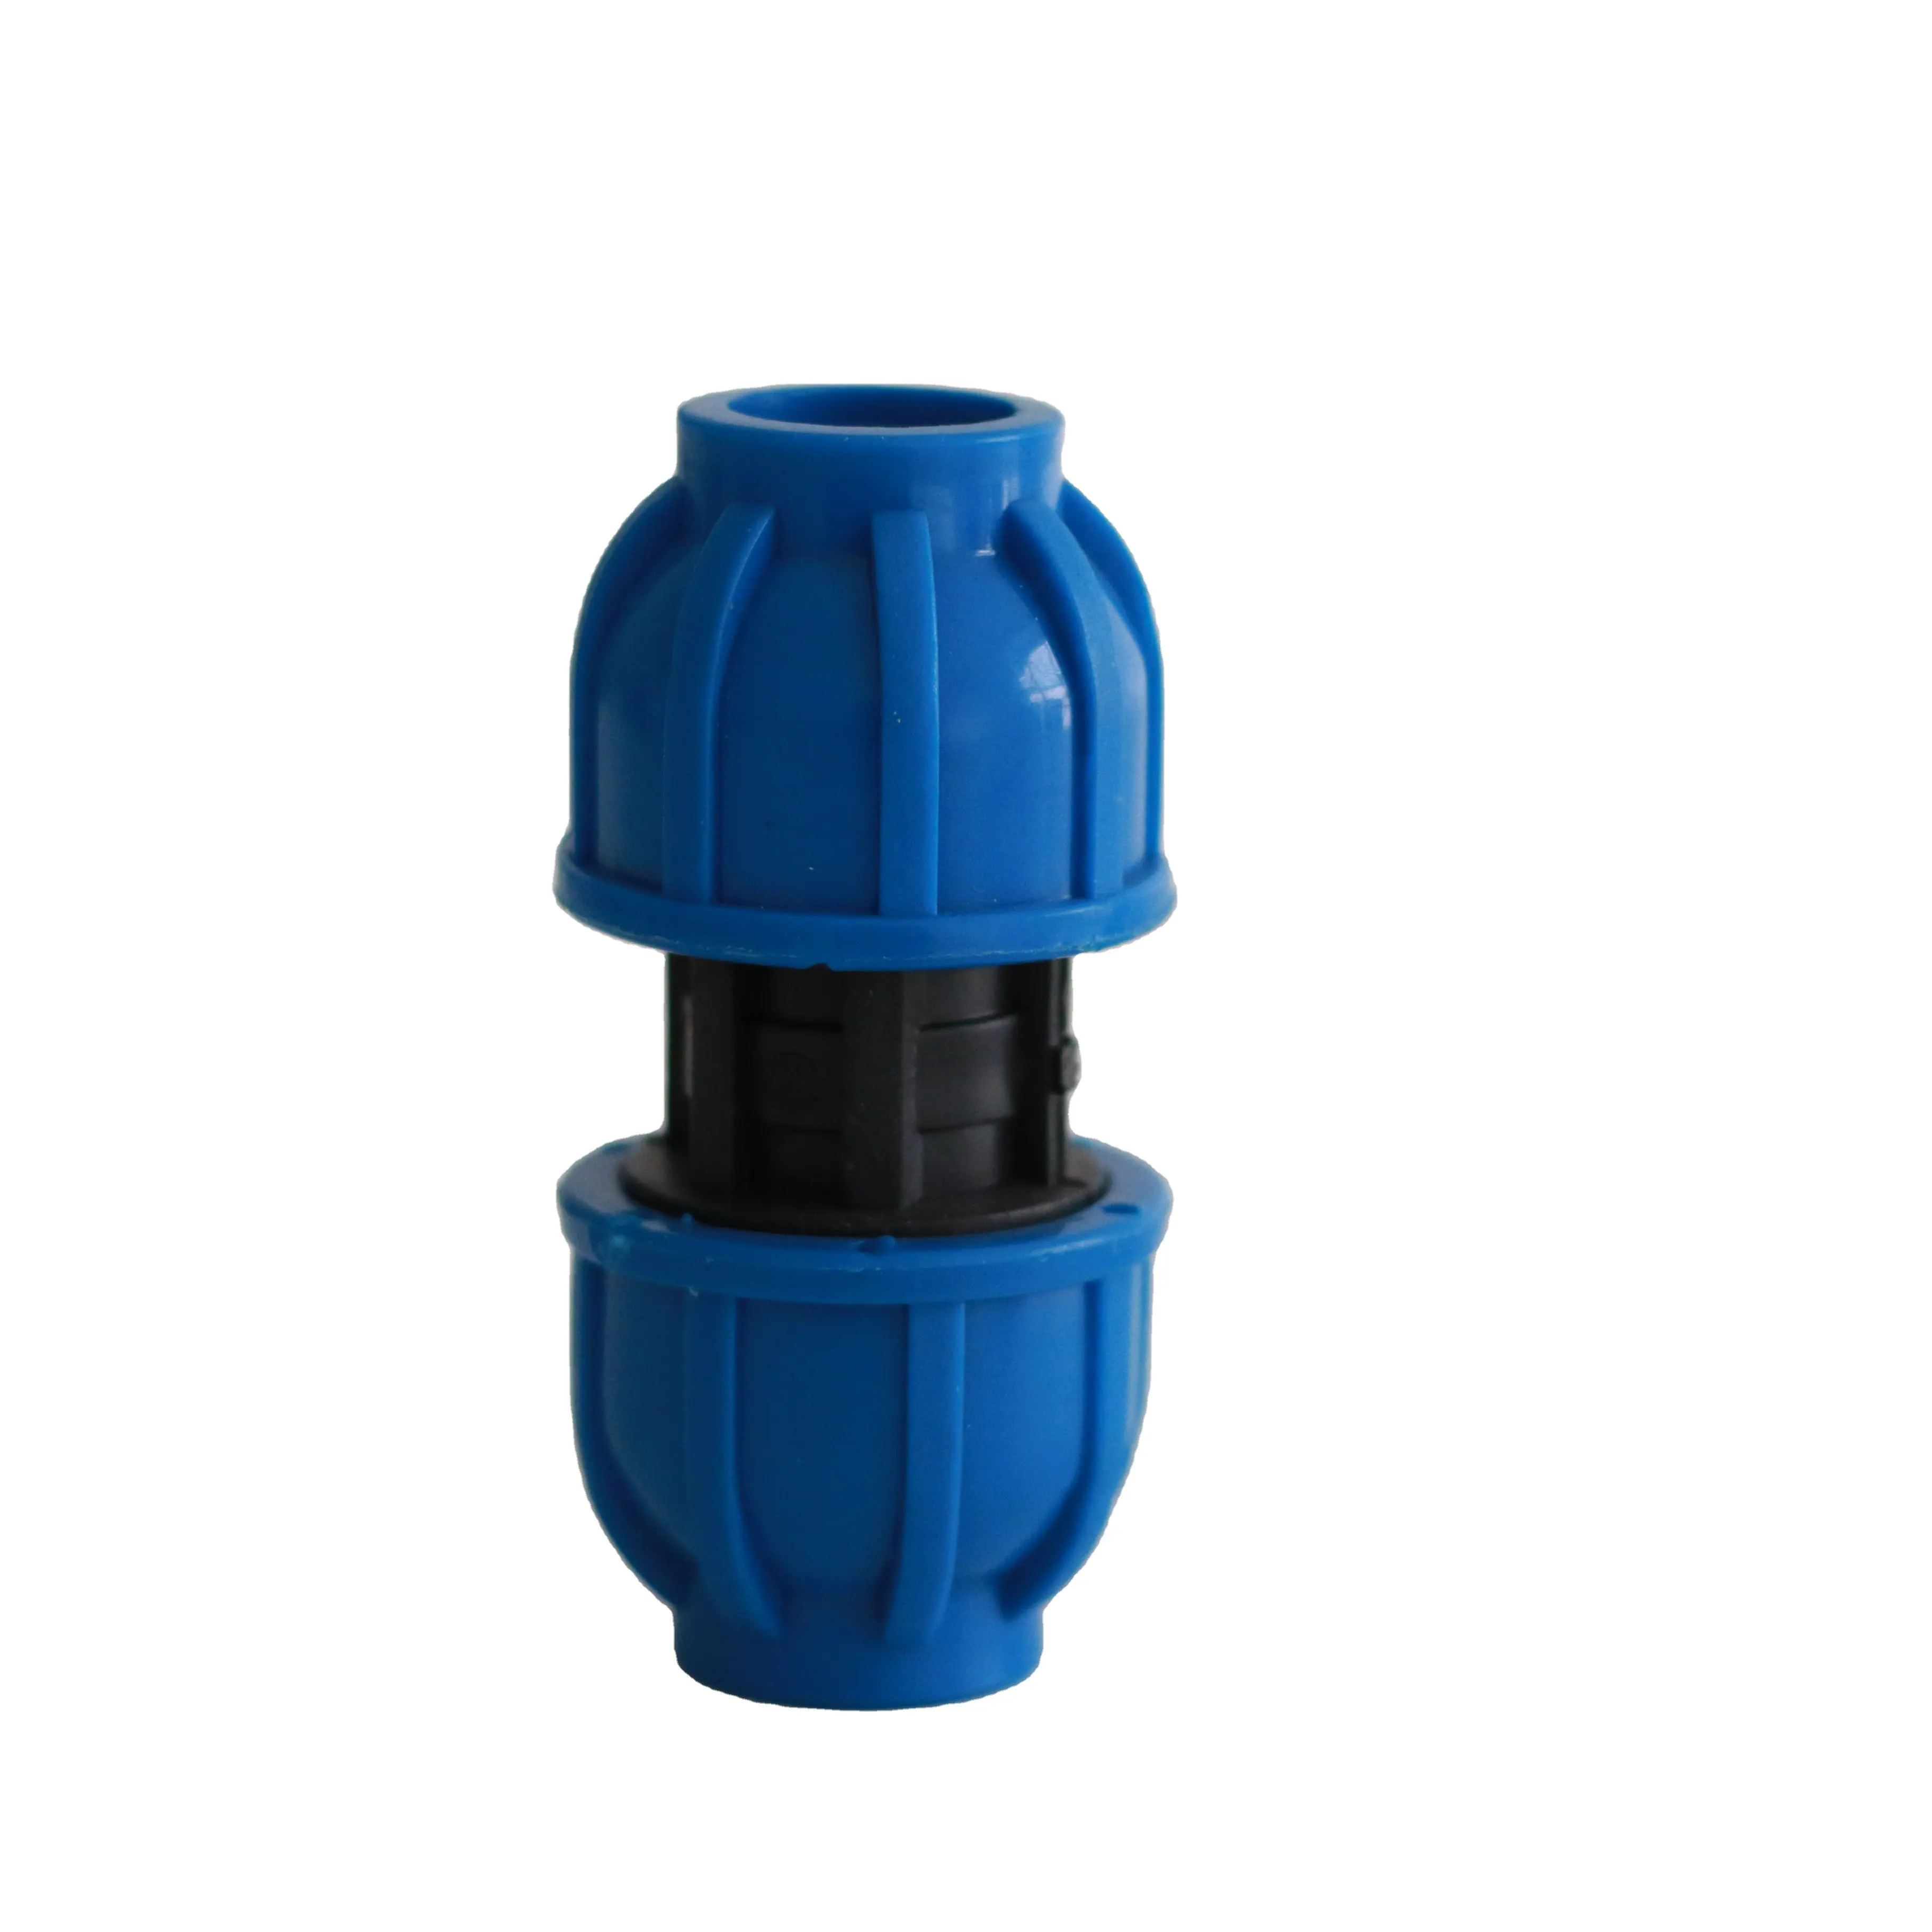 JY פלסטיק PE צינור מים מחבר מהיר כחול 25-20/32-25 מ""מ חיבור מהיר לצינור PE PVC